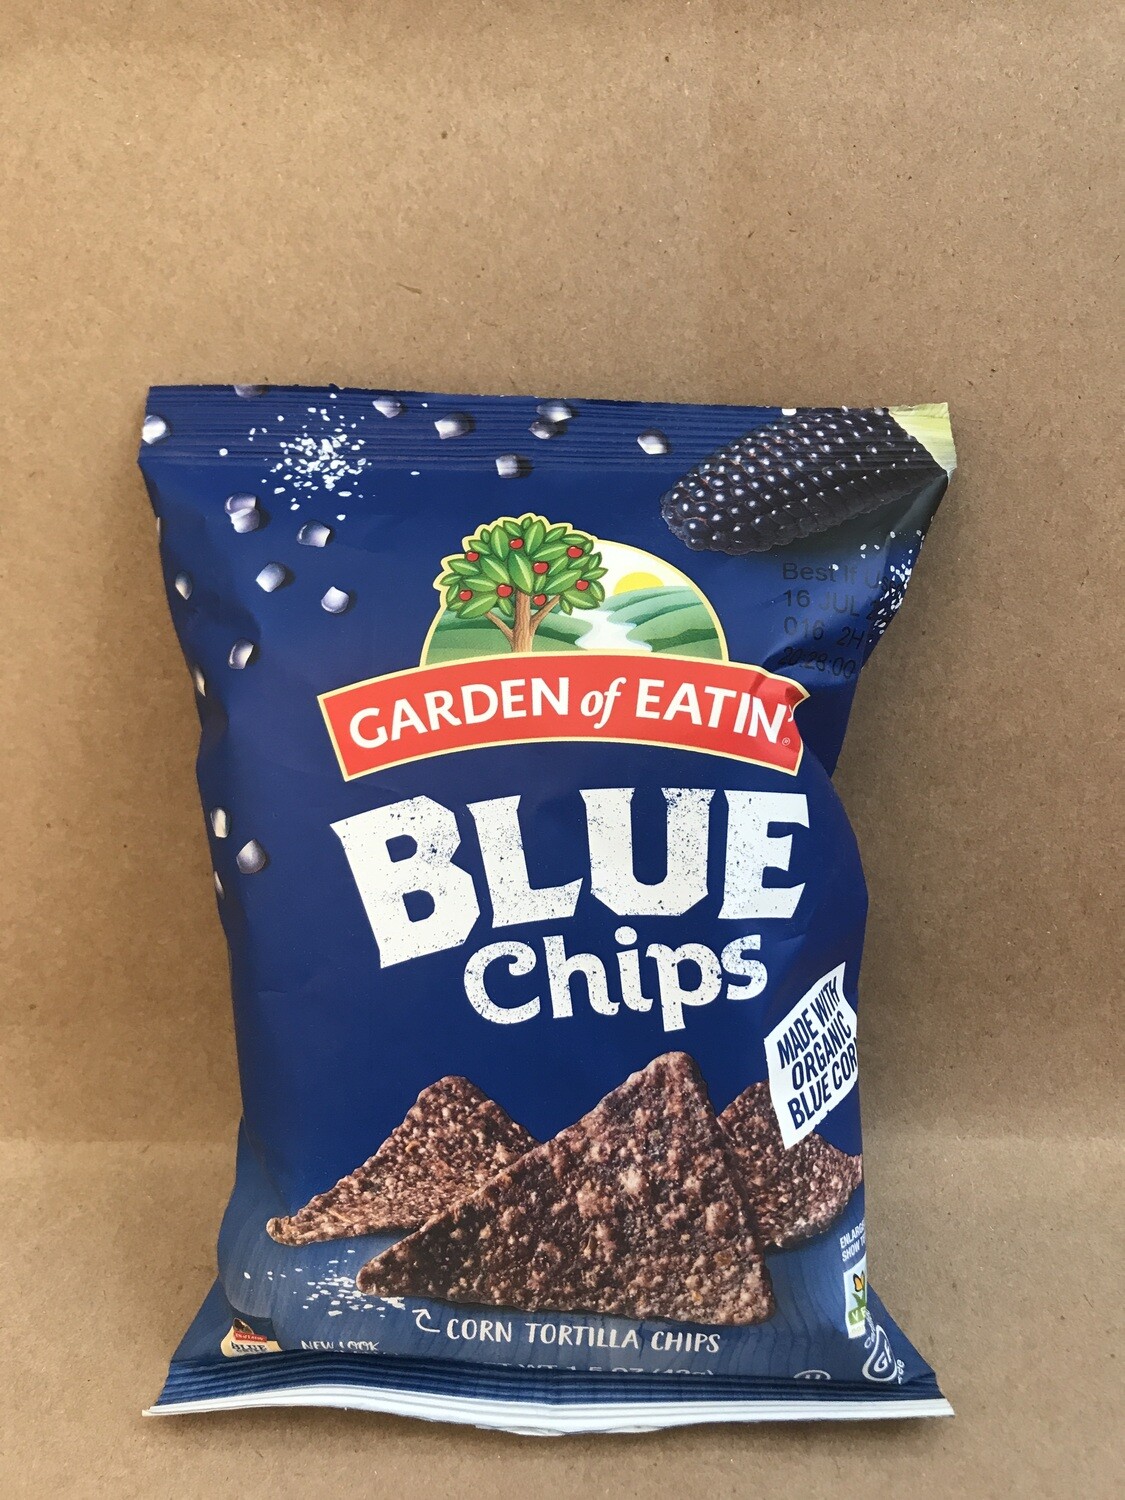 Chips / Small Bag / Garden of Eatin' Blue Chips, 1.5 oz.